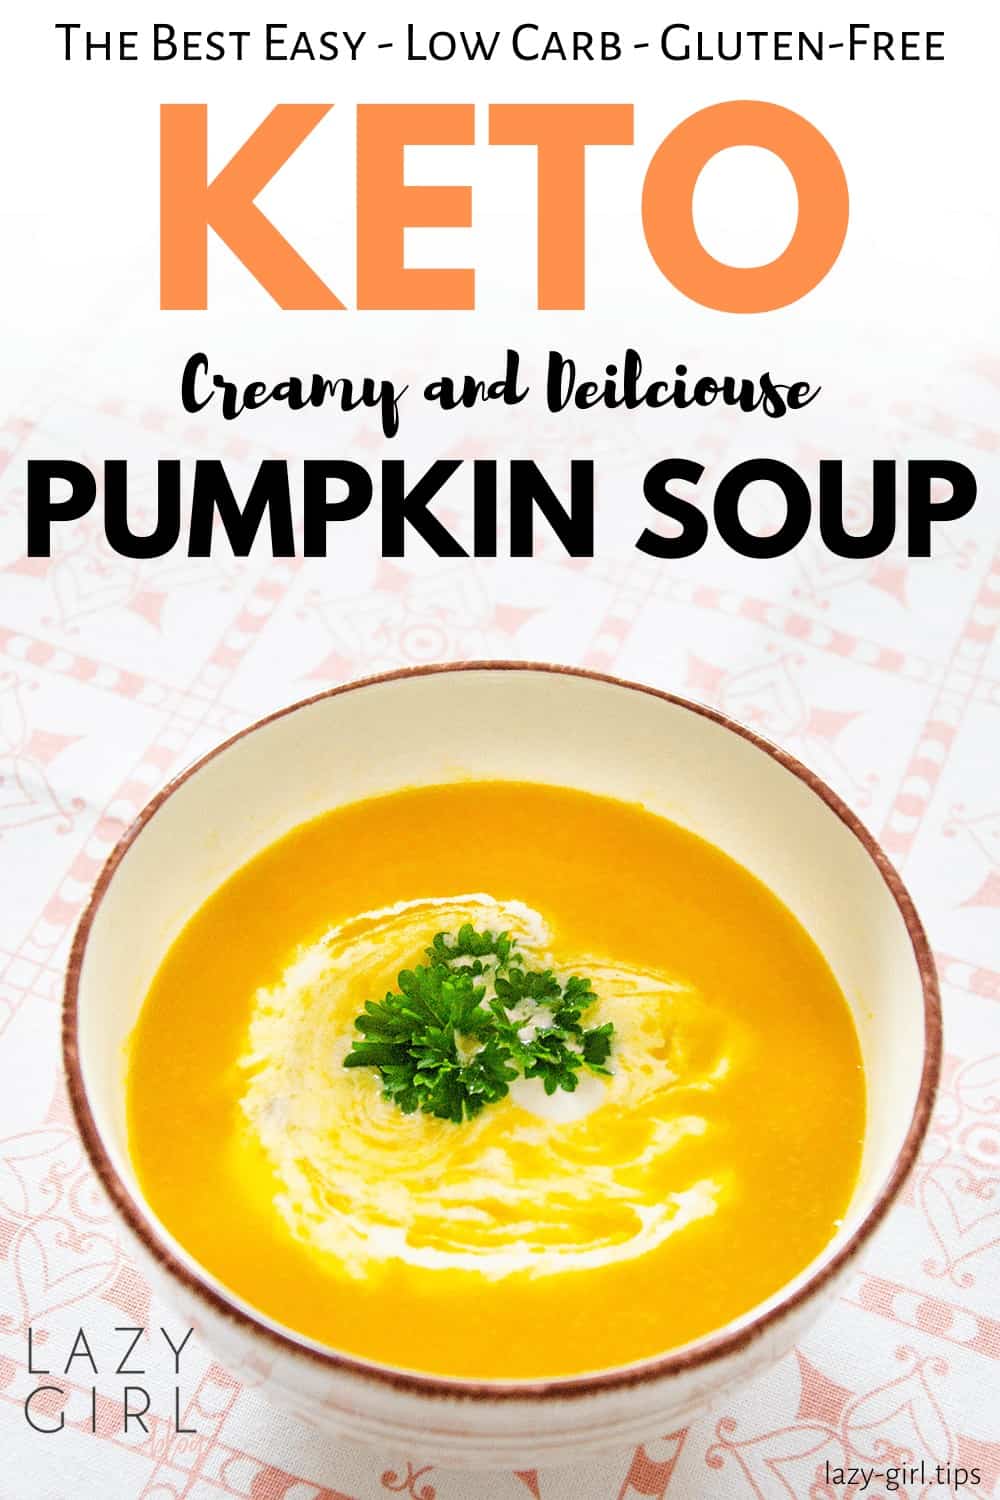 Easy Pumpkin Soup Recipe – Keto Low Carb Gluten-Free - Lazy Girl